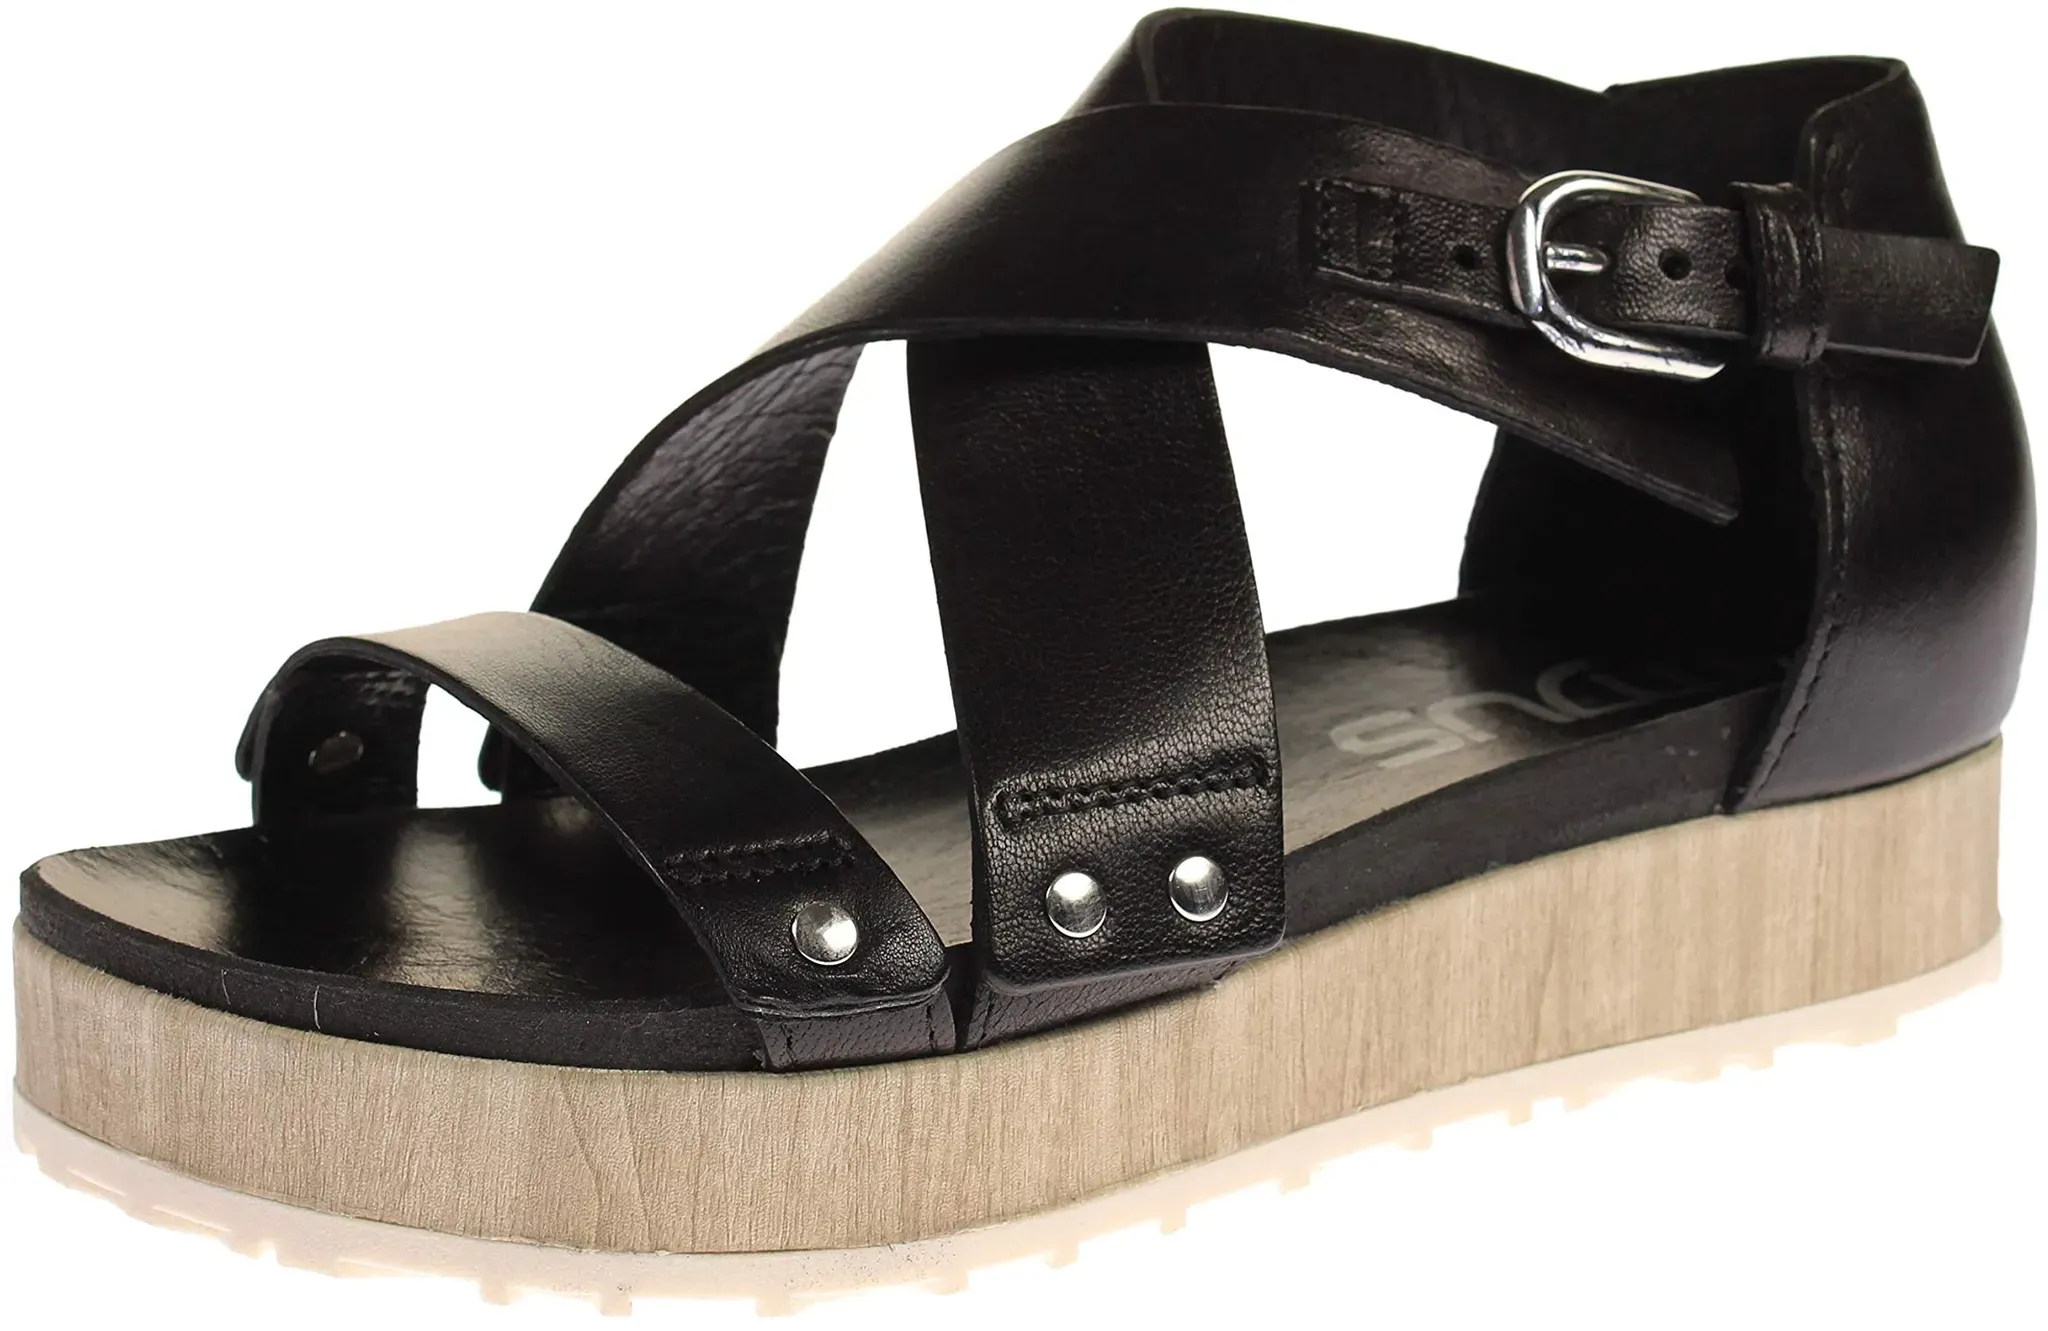 Mjus M06016-101-0002 - Damen Schuhe Sandaletten - nero-beige, Größe:38 EU - 38 EU